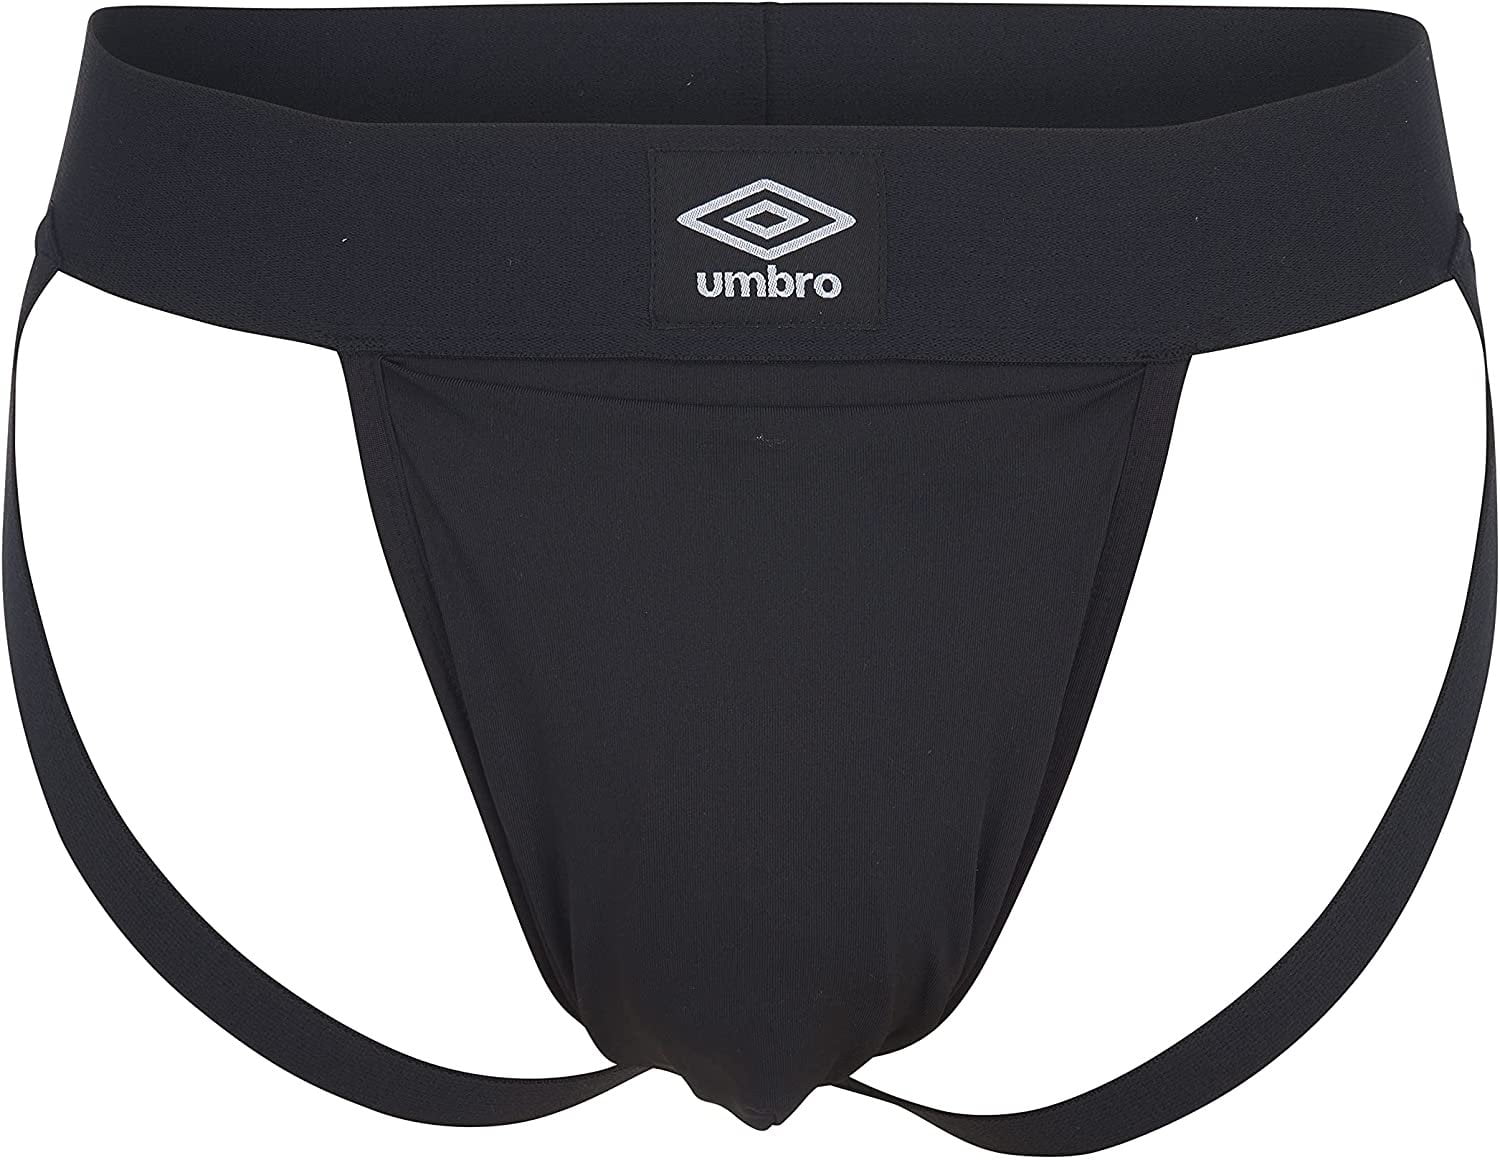 Umbro Men's Jock Strap Athletic Performance Underwear Cup Pocket S-2X